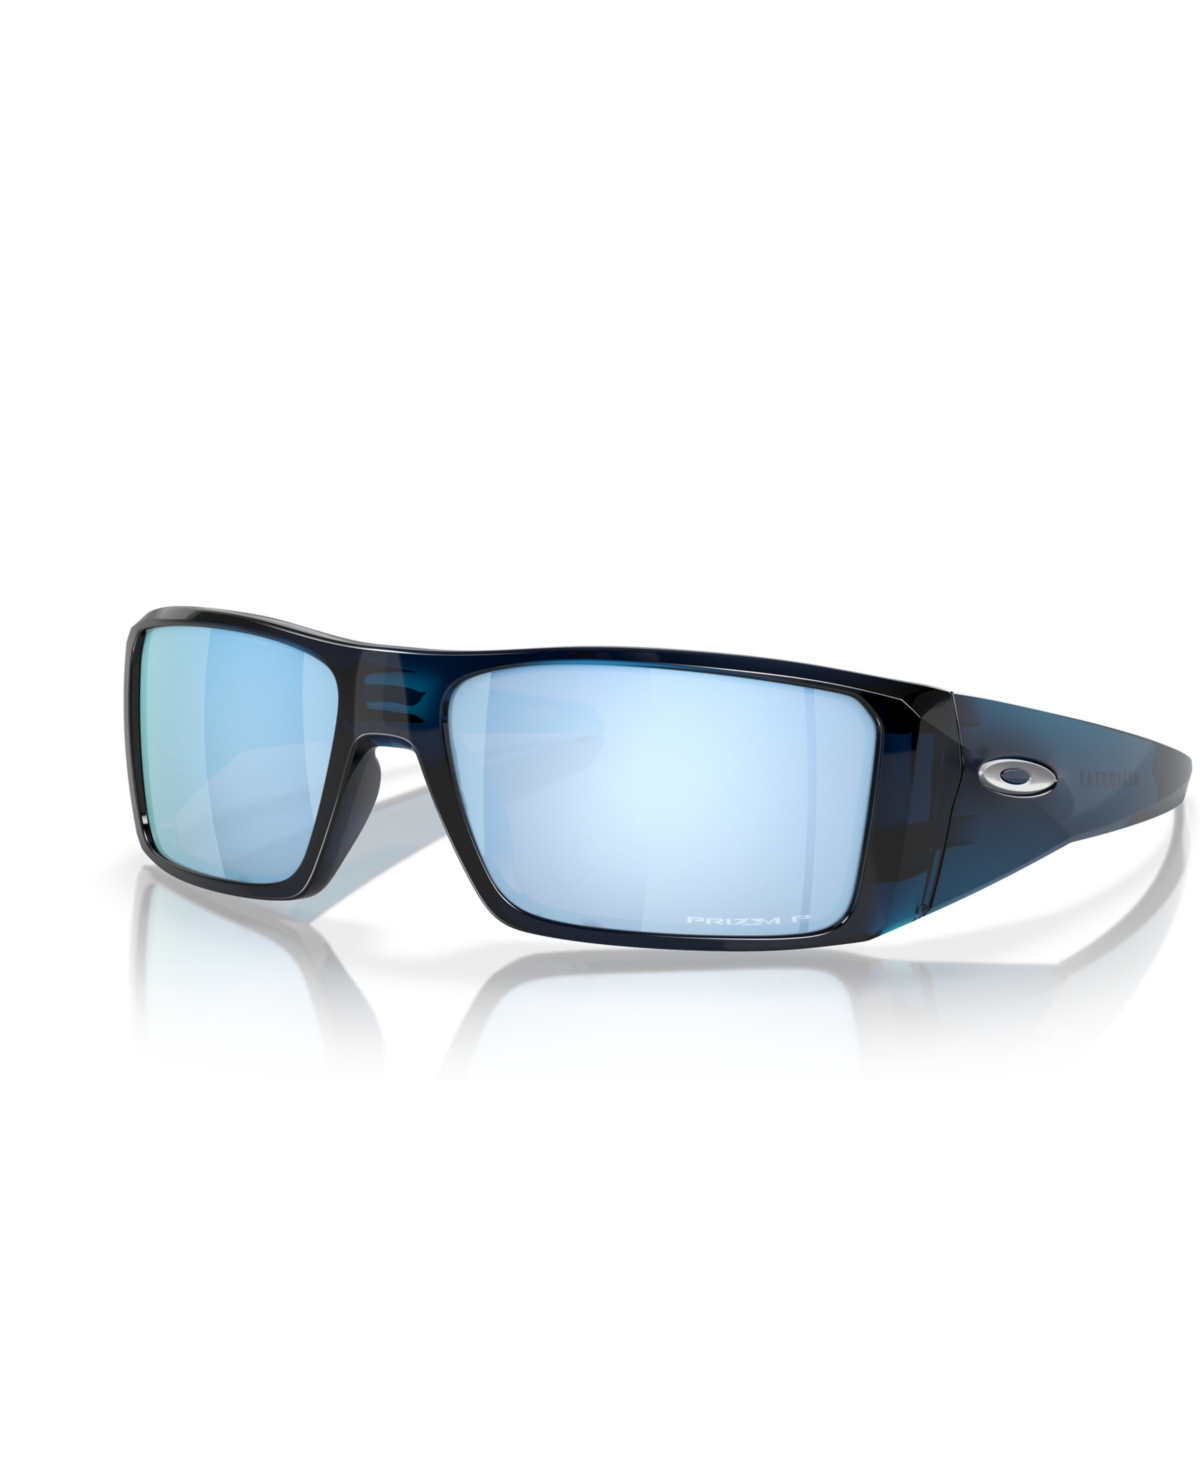 Men's Polarized Sunglasses, Heliostat - Blue Steel